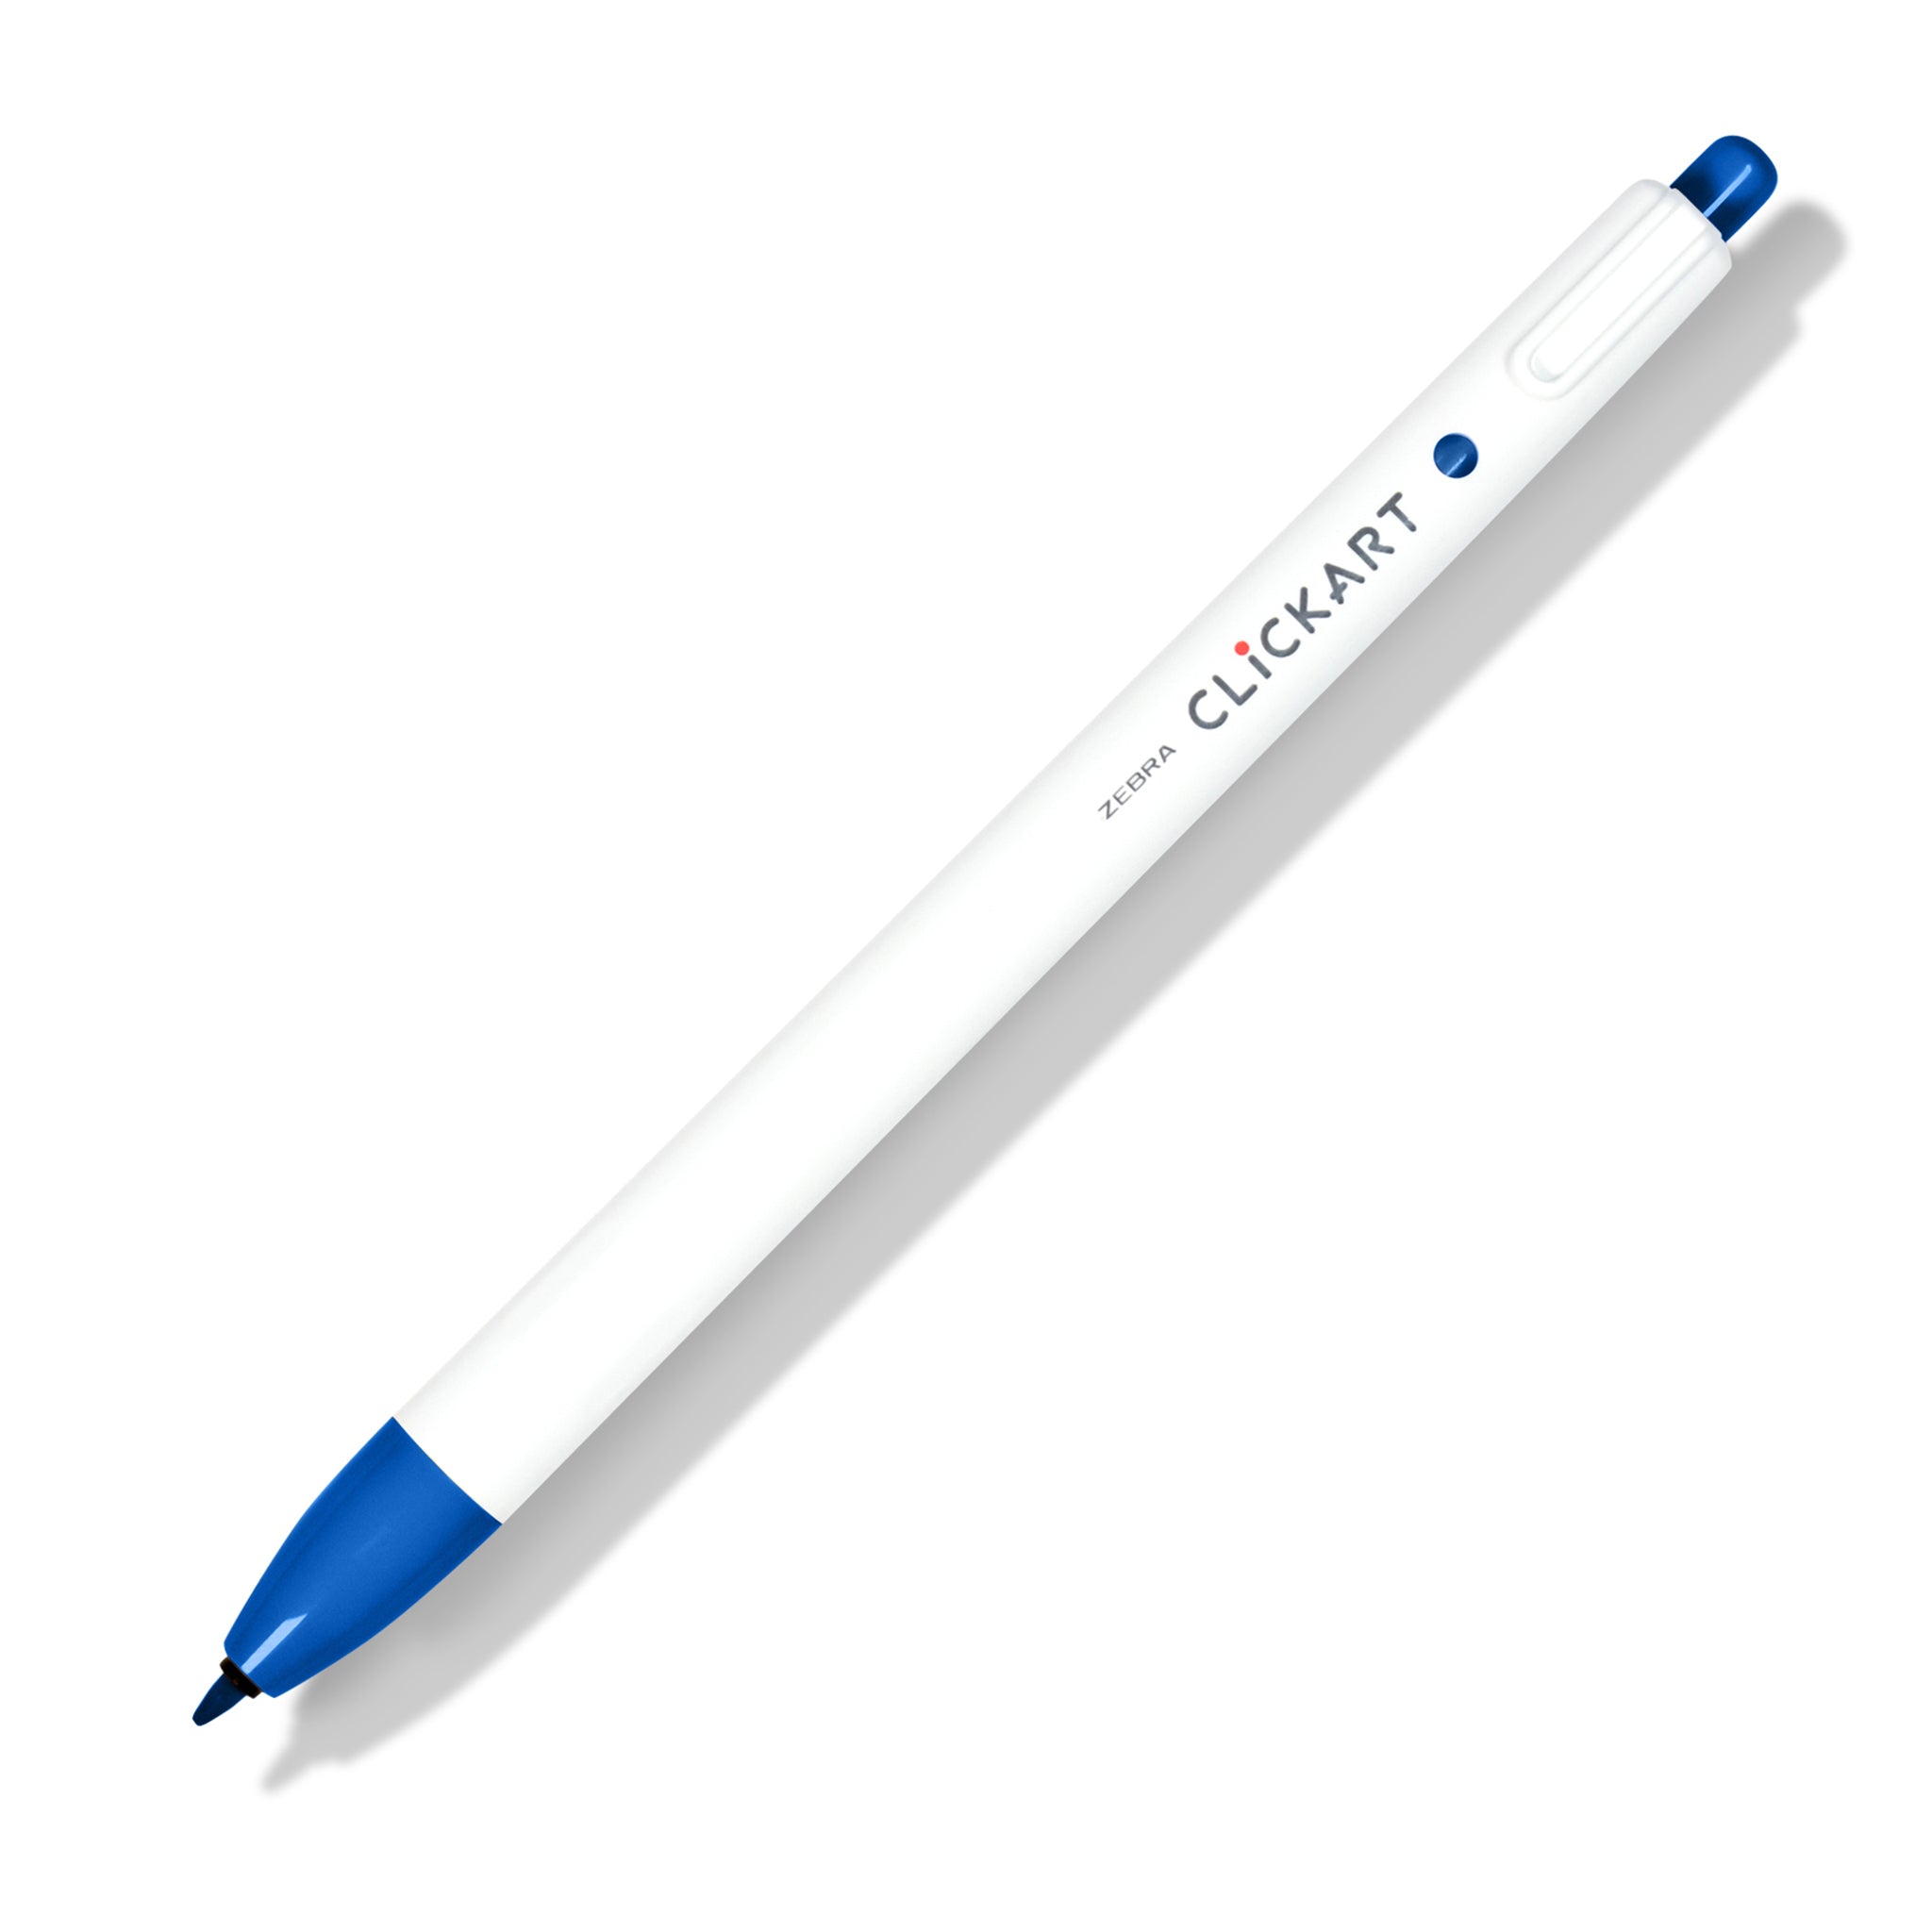 Clickart Retractable Pen Marker - Palette 2